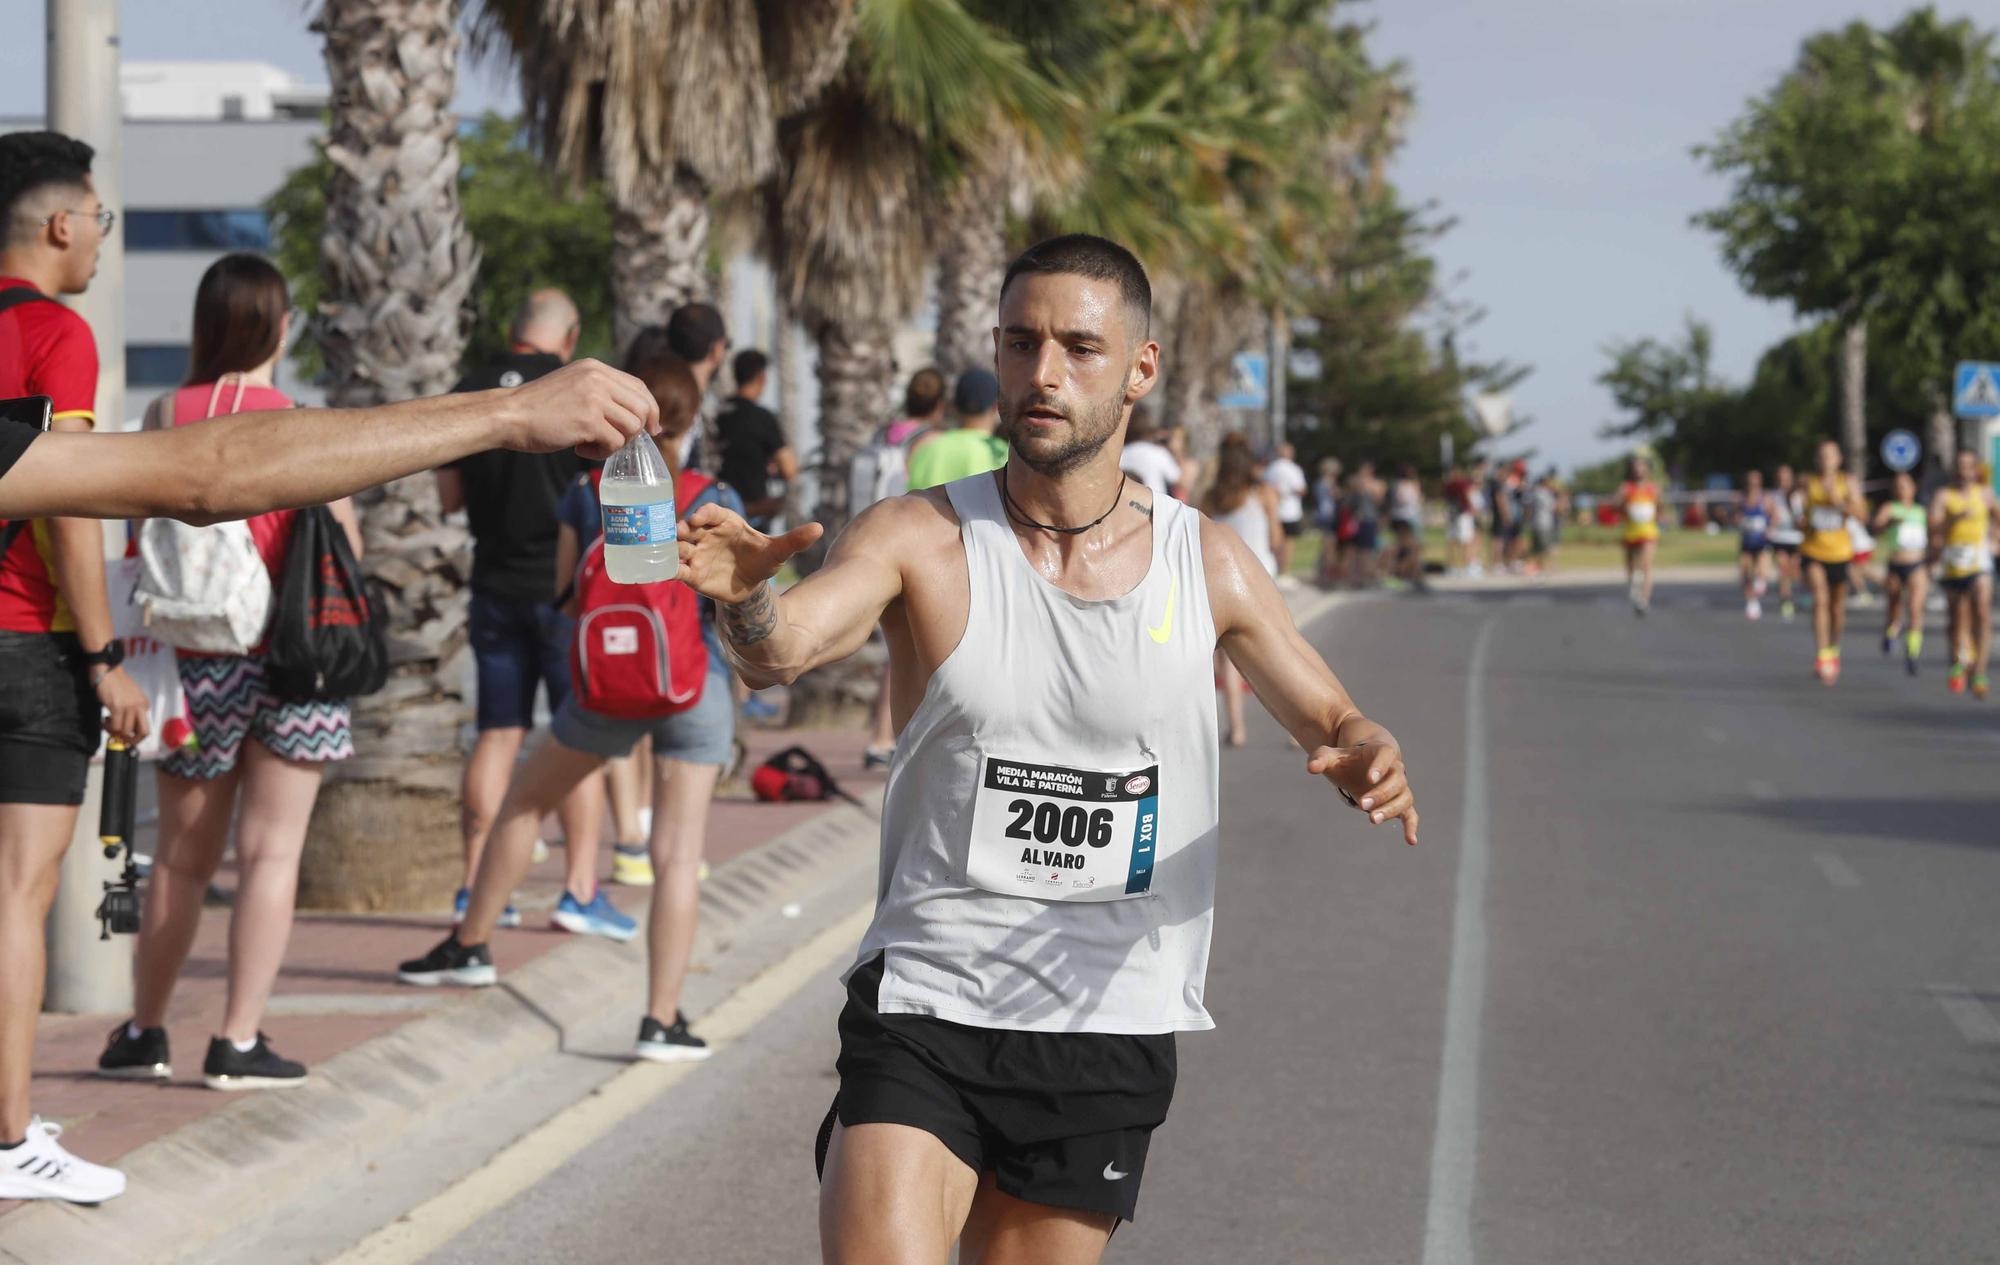 Campeonato de España de Medio Maratón de Paterna